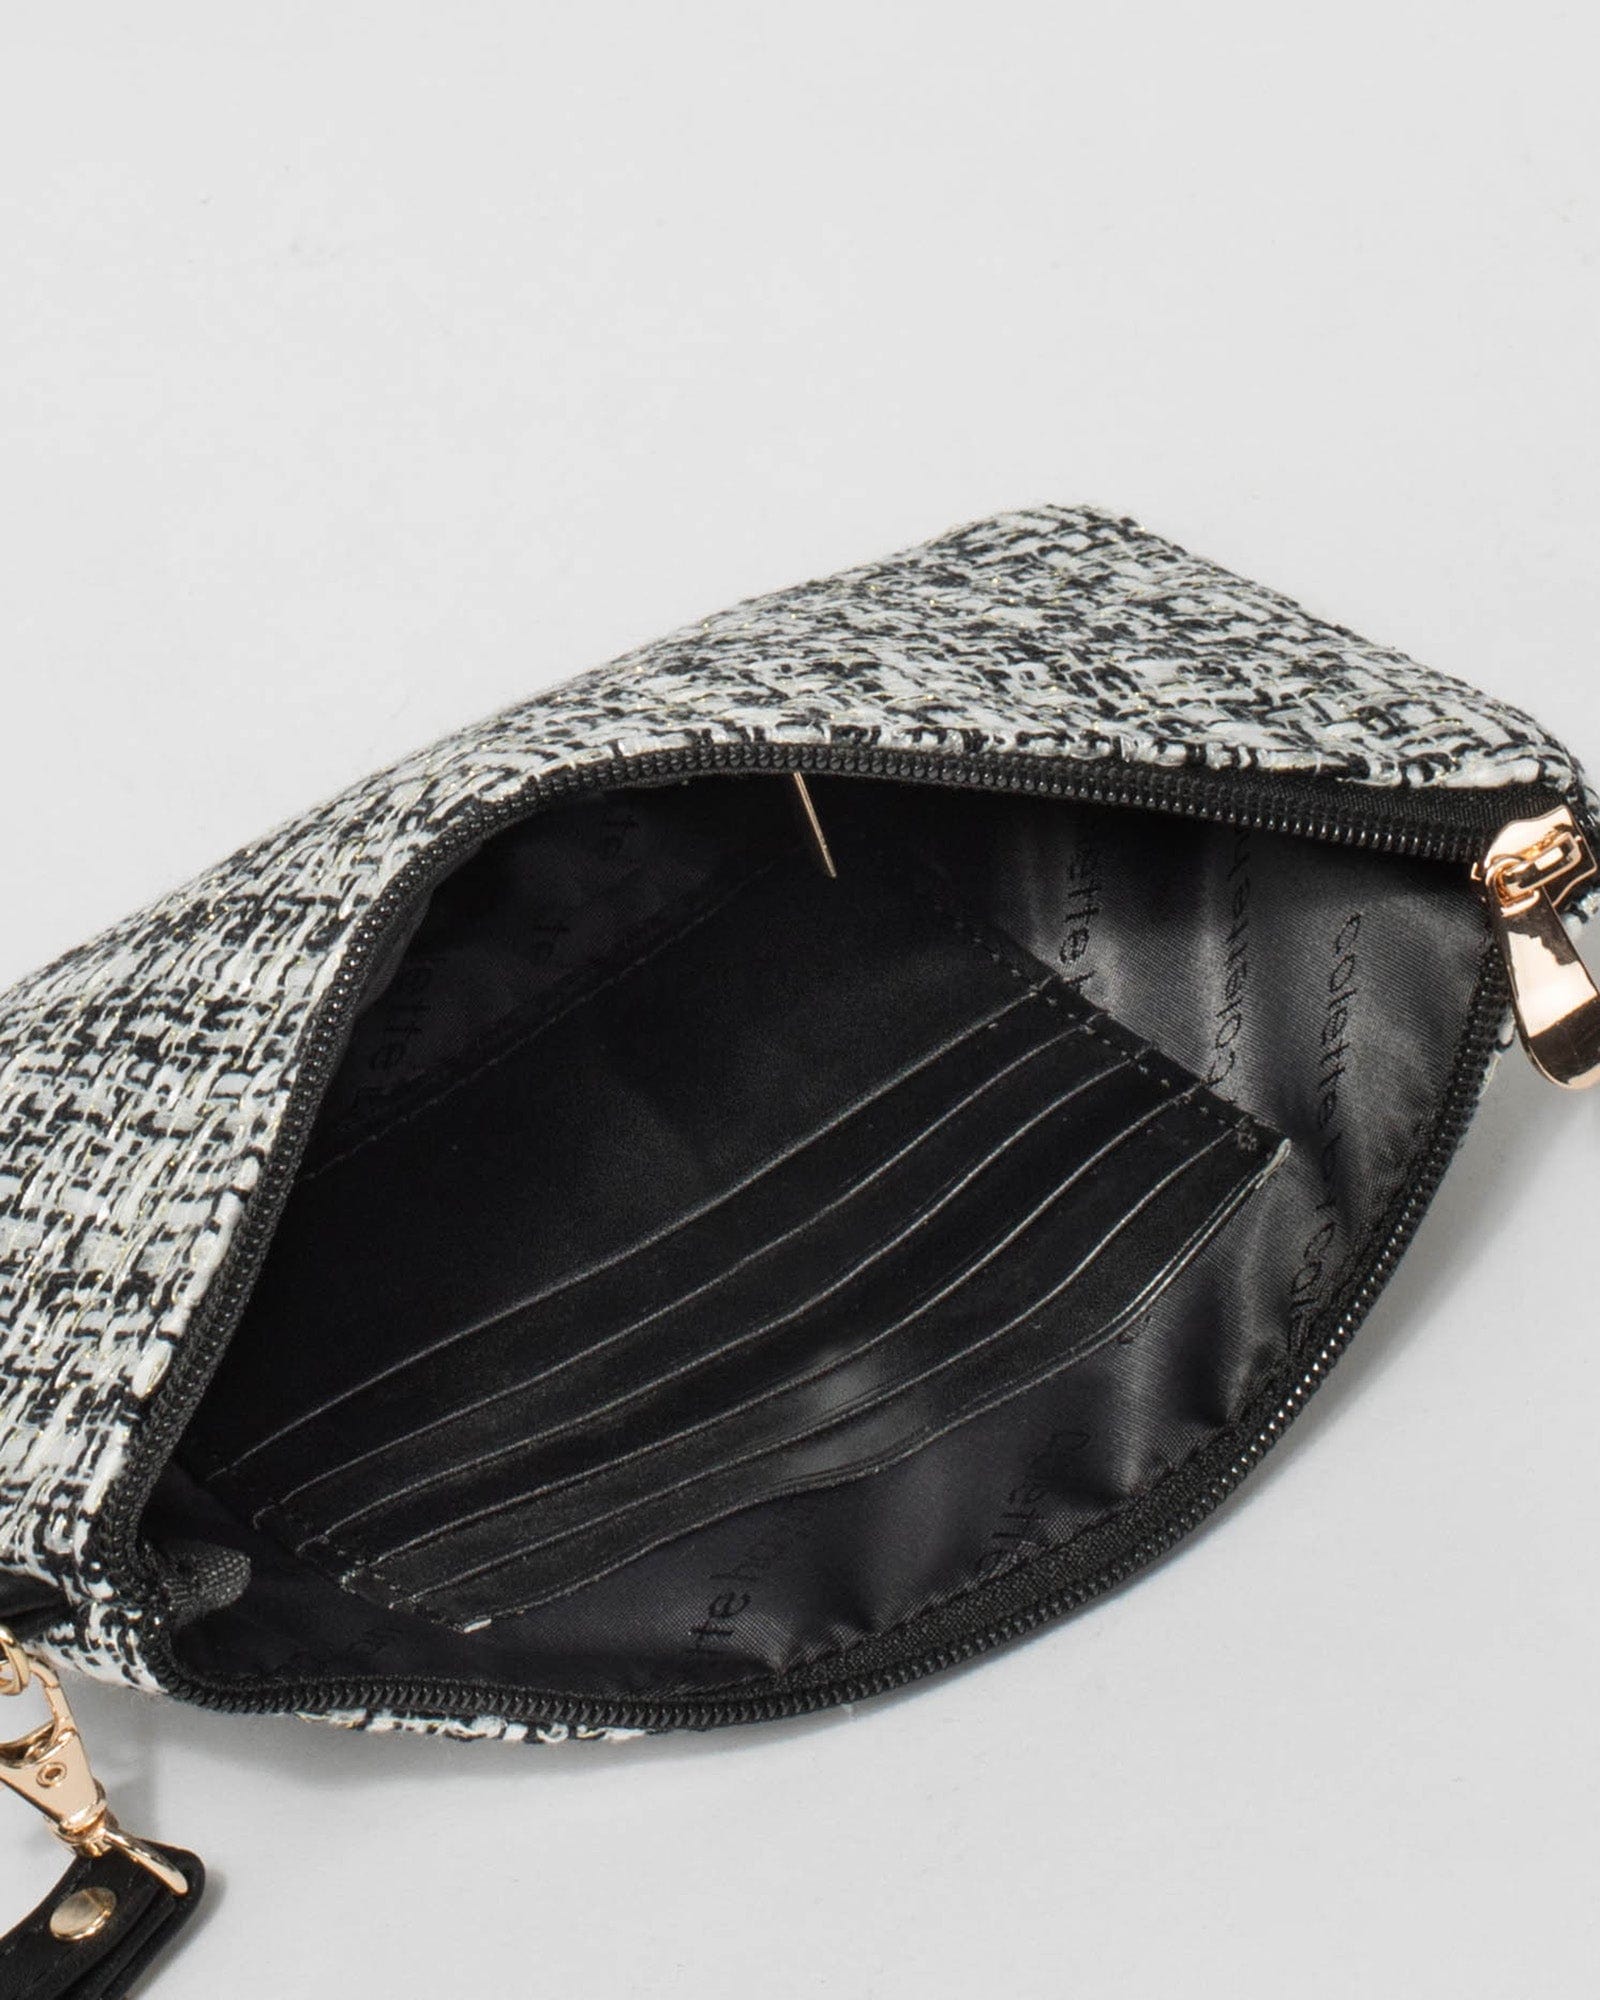 Valentina leather sling hobo bag | Hobo bag, Leather, Bags